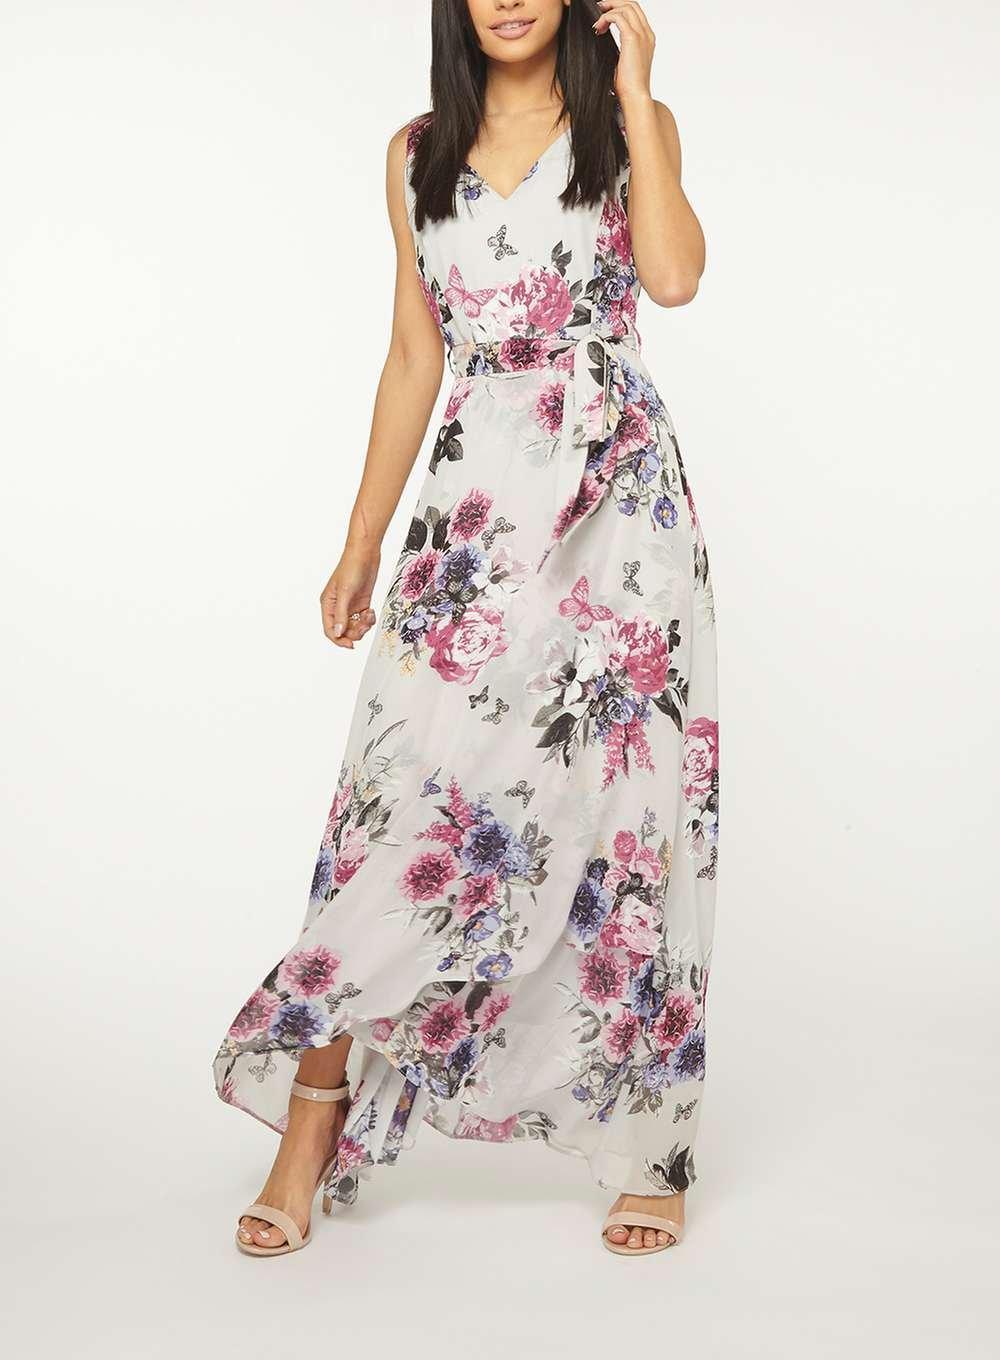 billie and blossom floral dress